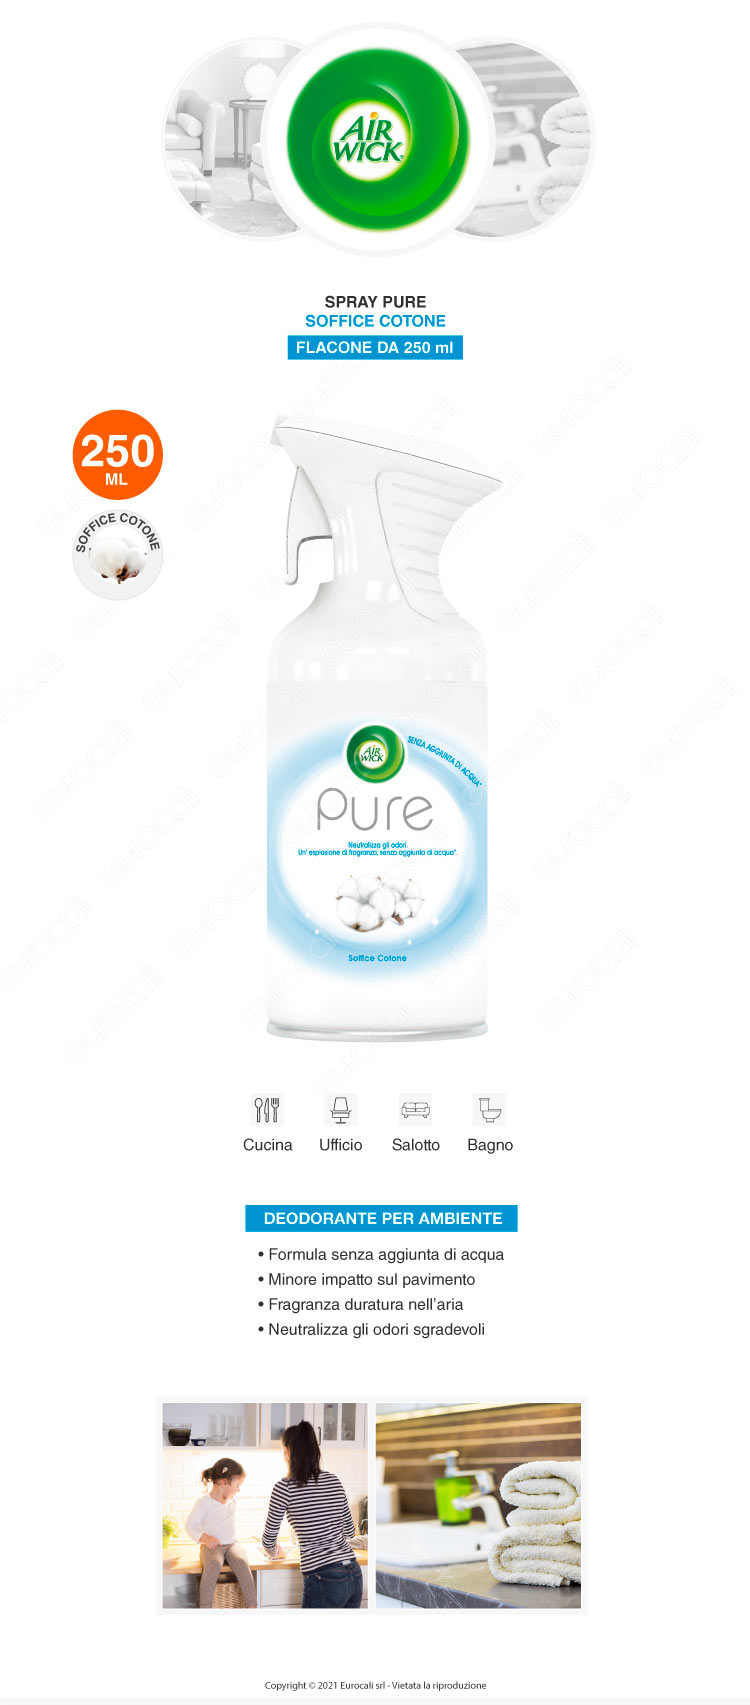 Air Wick Spray Pure Soffice Cotone